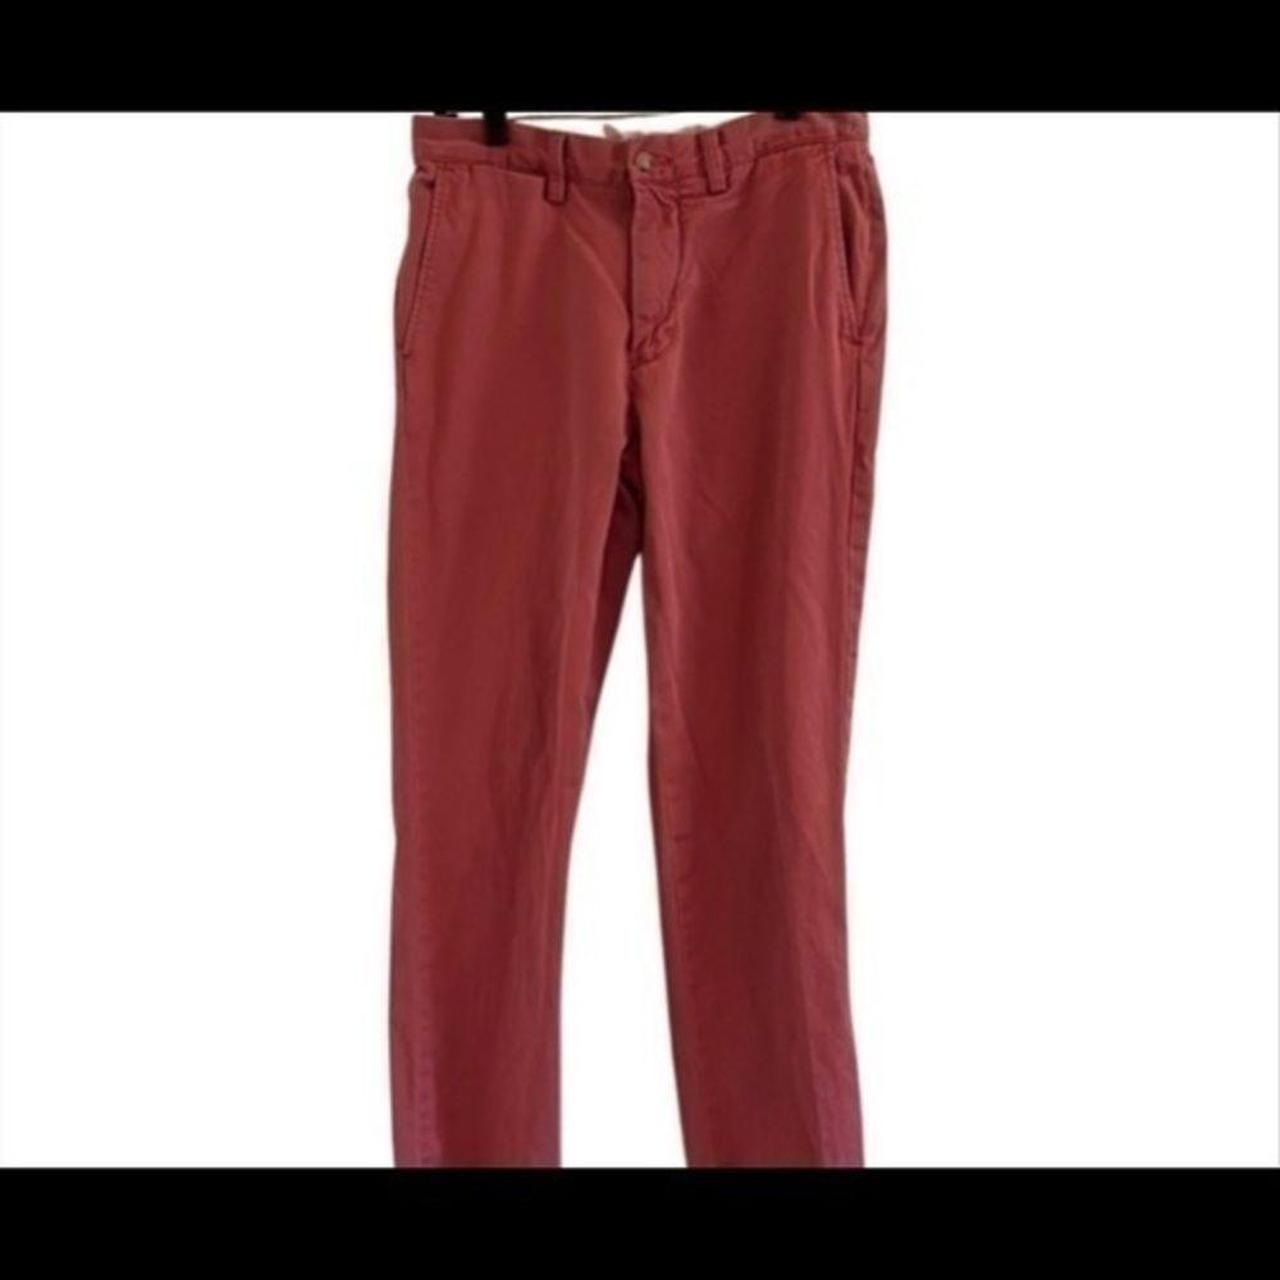 Product Image 1 - Ralph Lauren Polo Pants. Great